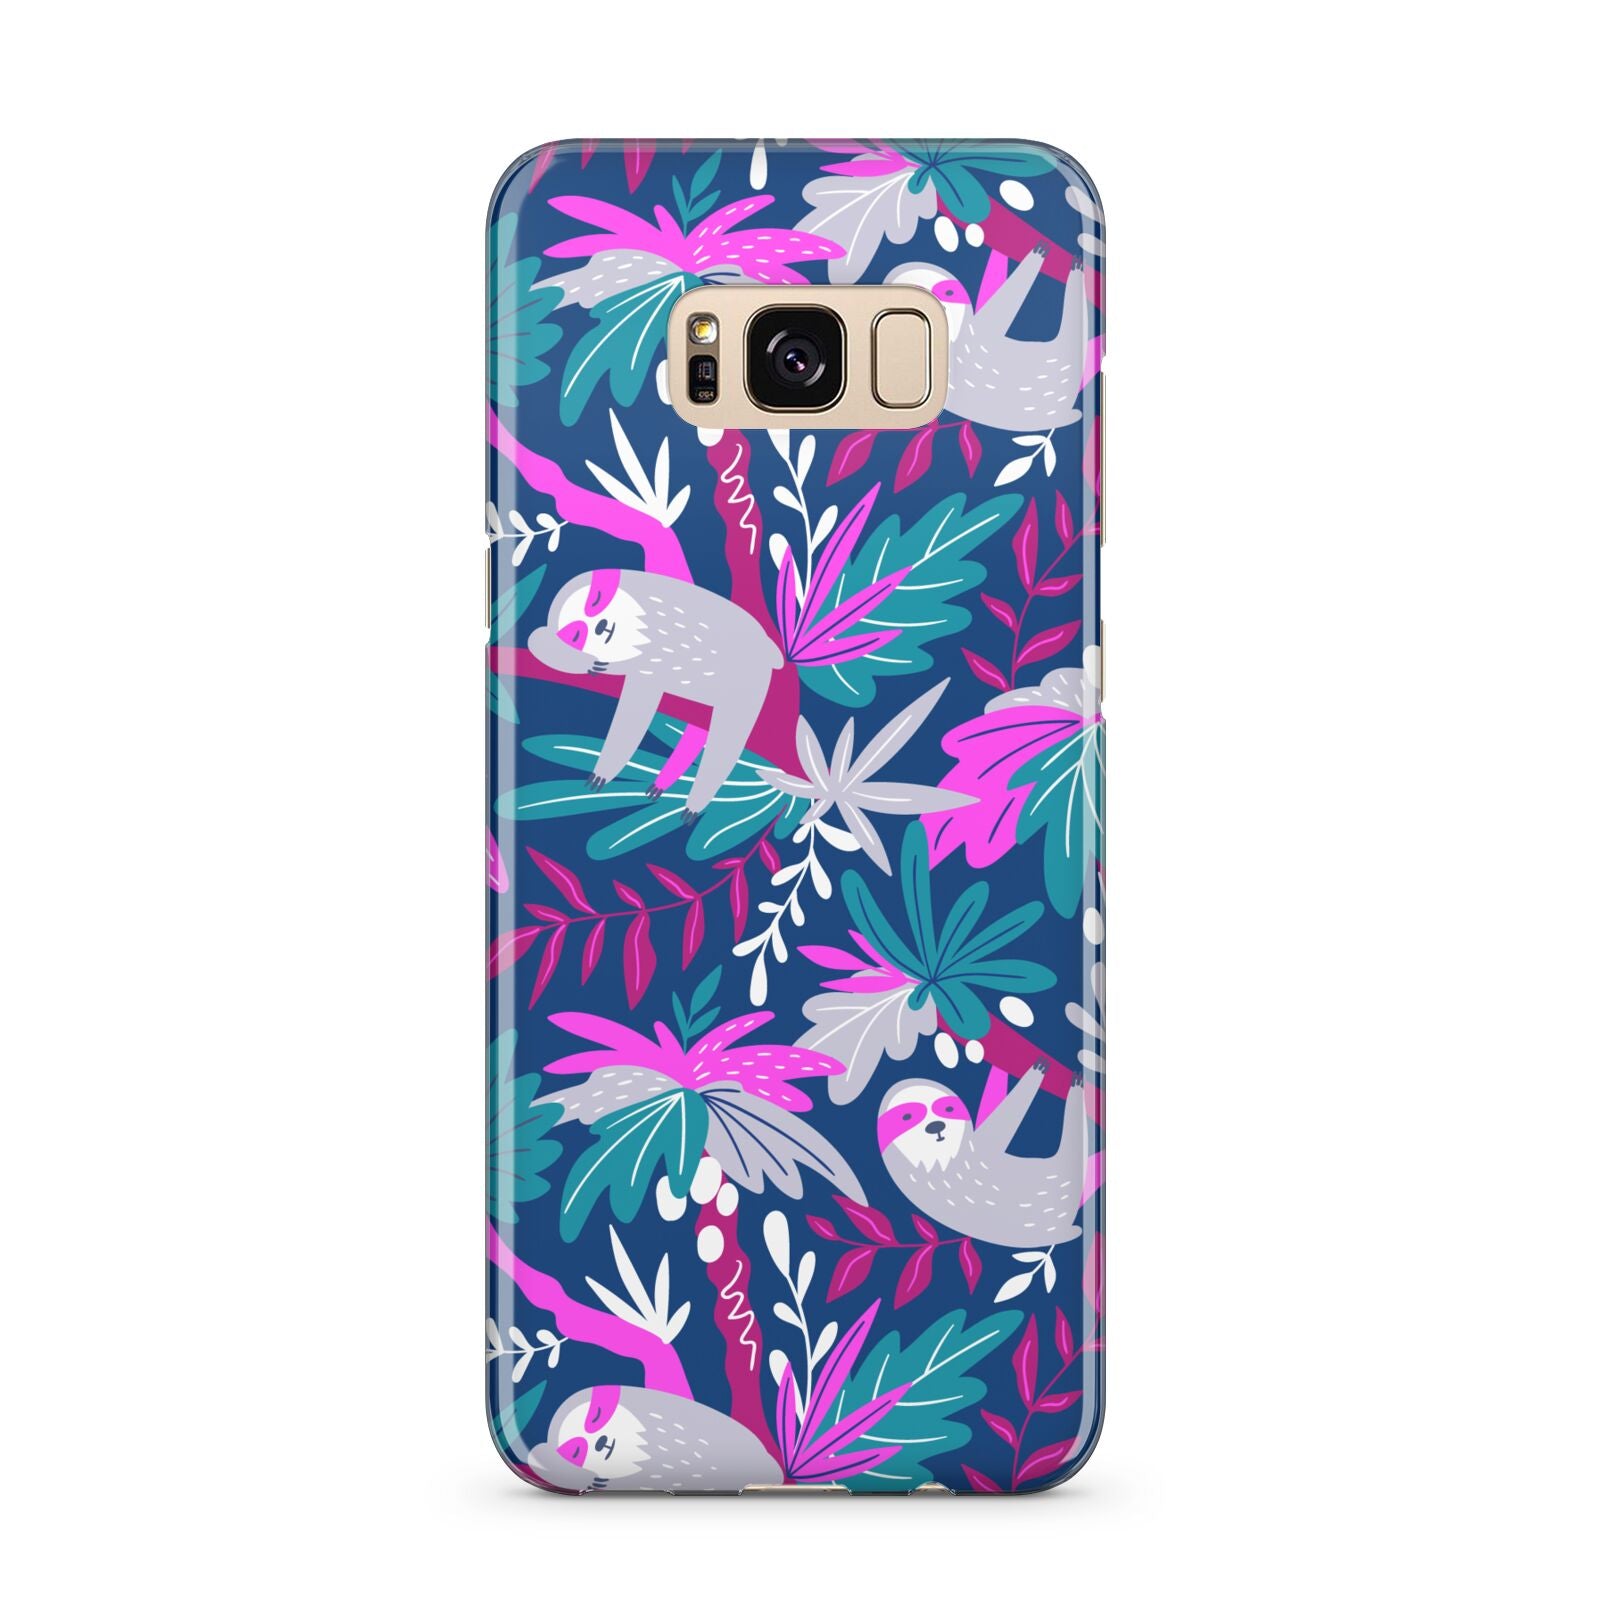 Sloth Samsung Galaxy S8 Plus Case